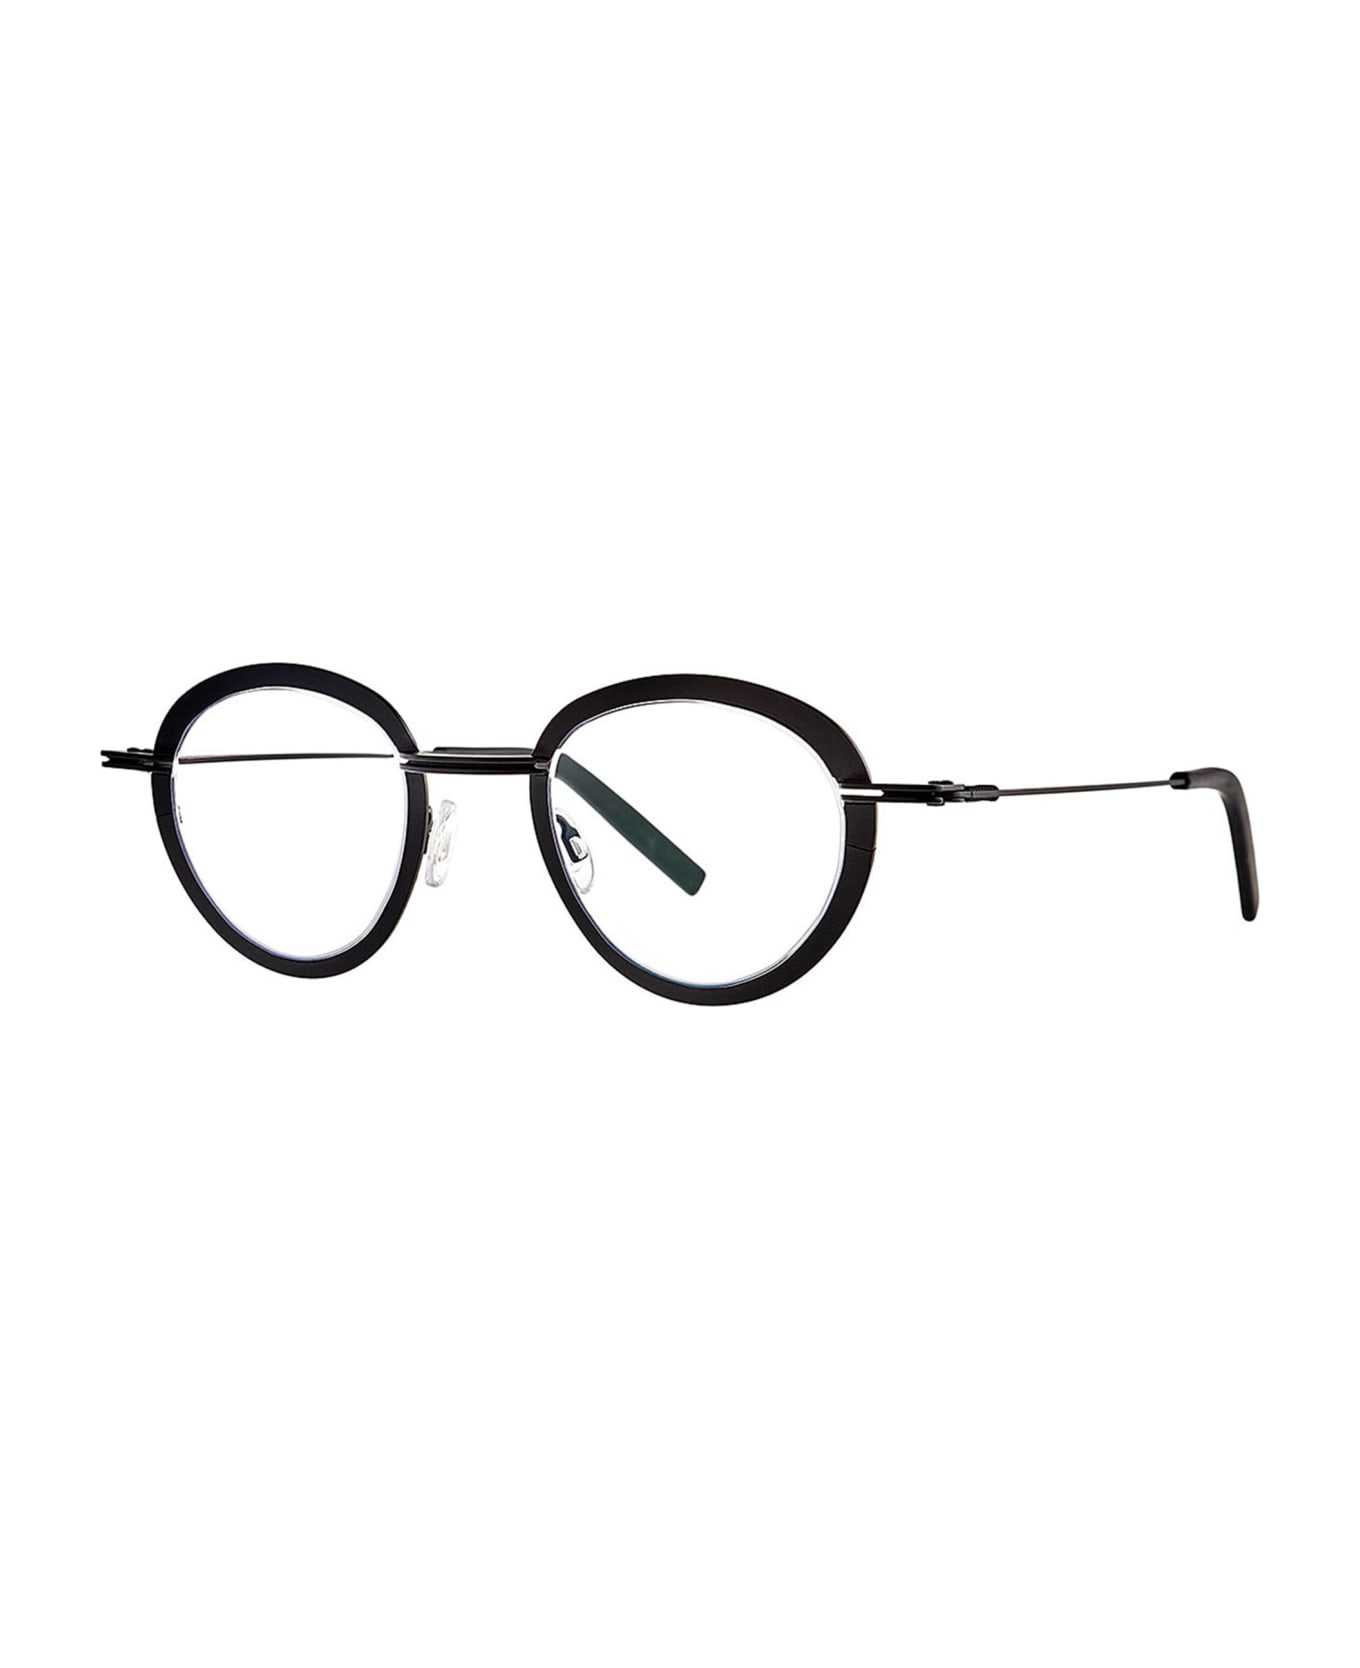 Theo Eyewear Sensational - 005 Rx Glasses - black matte